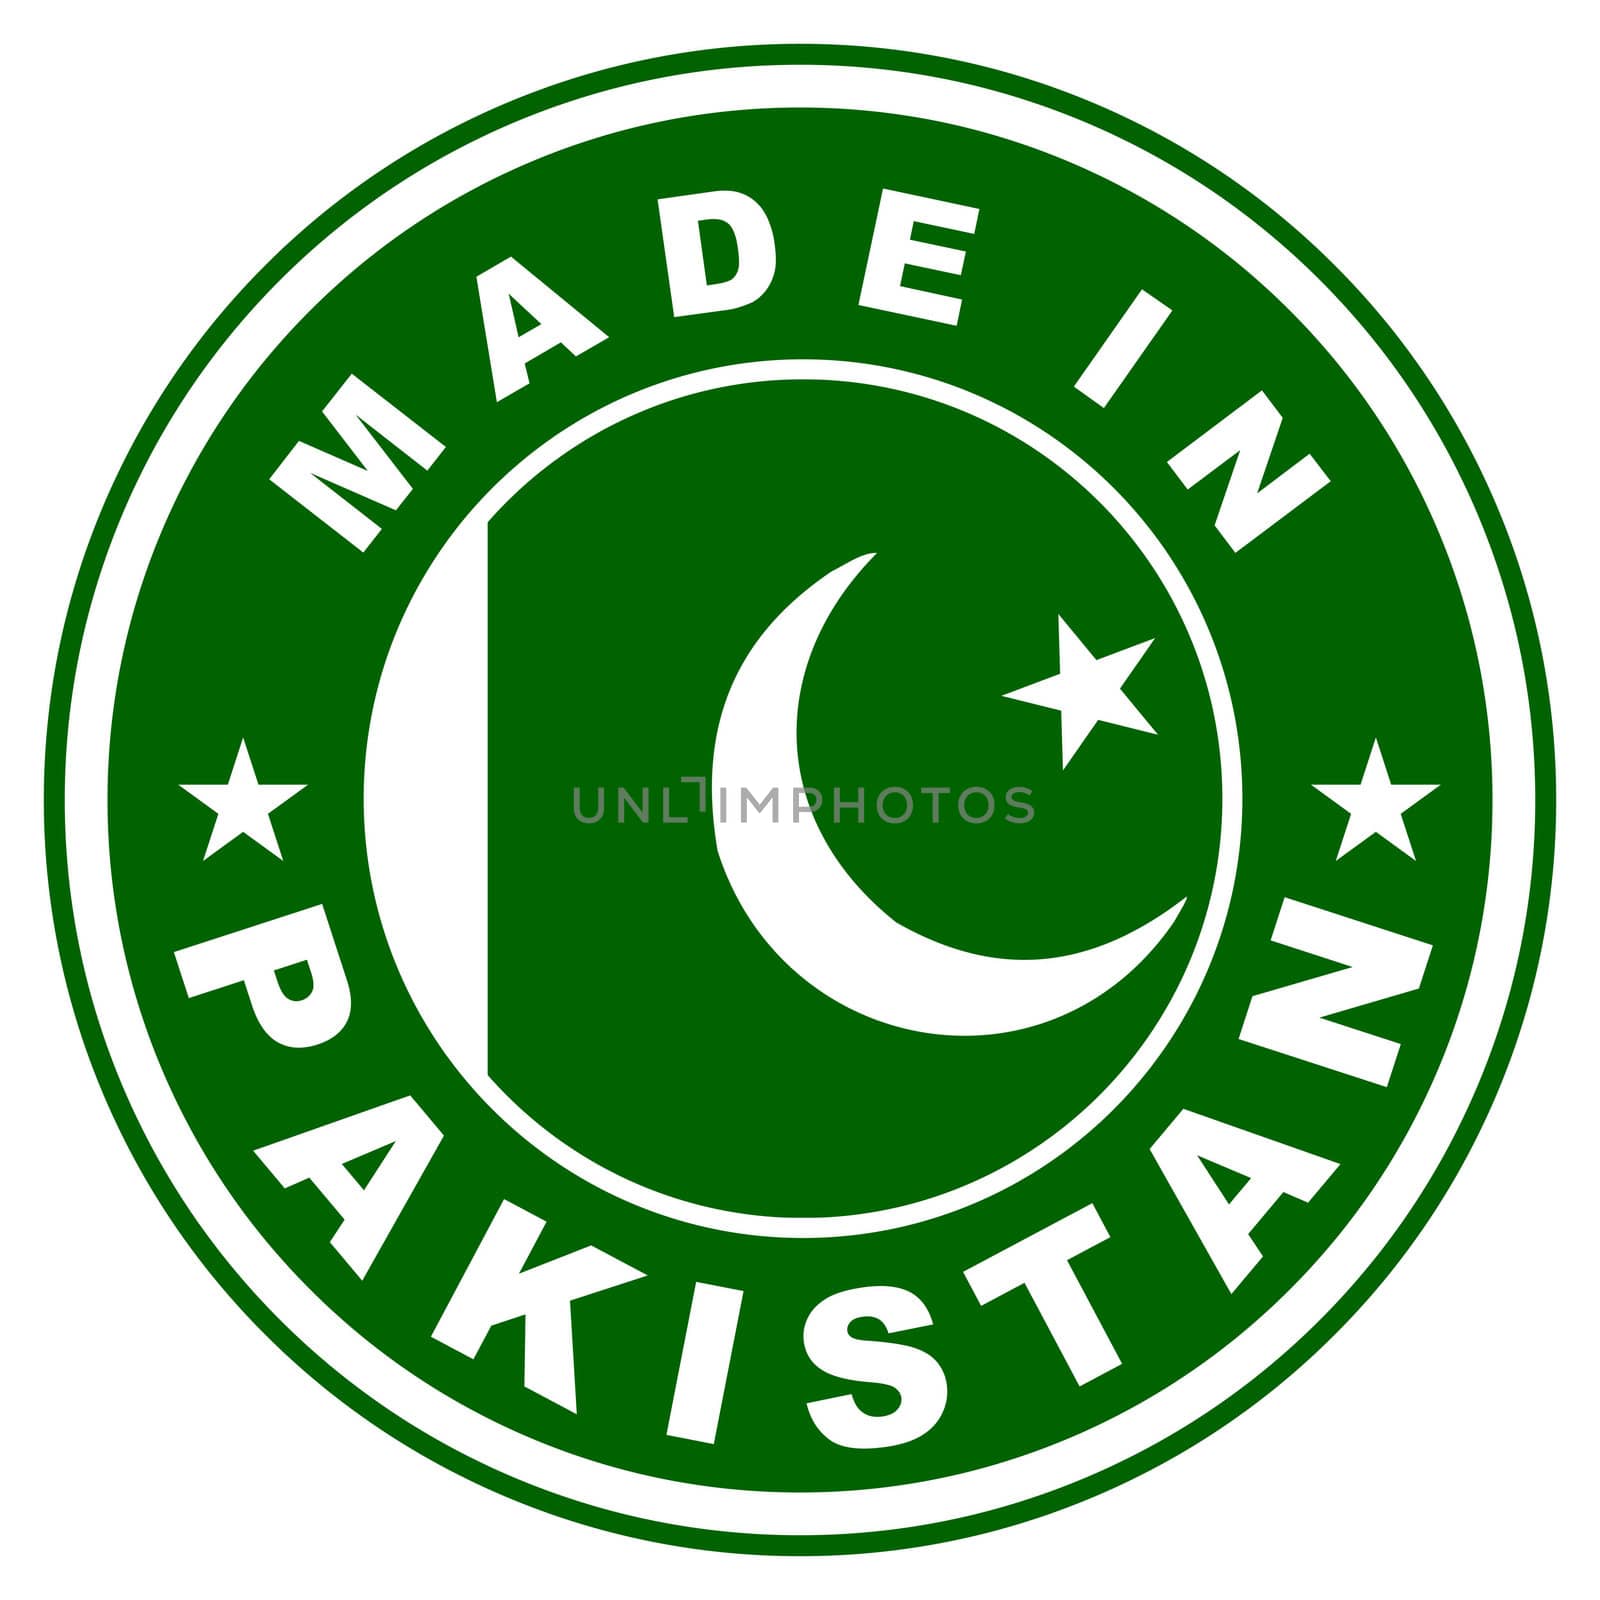 made in pakistan by tony4urban